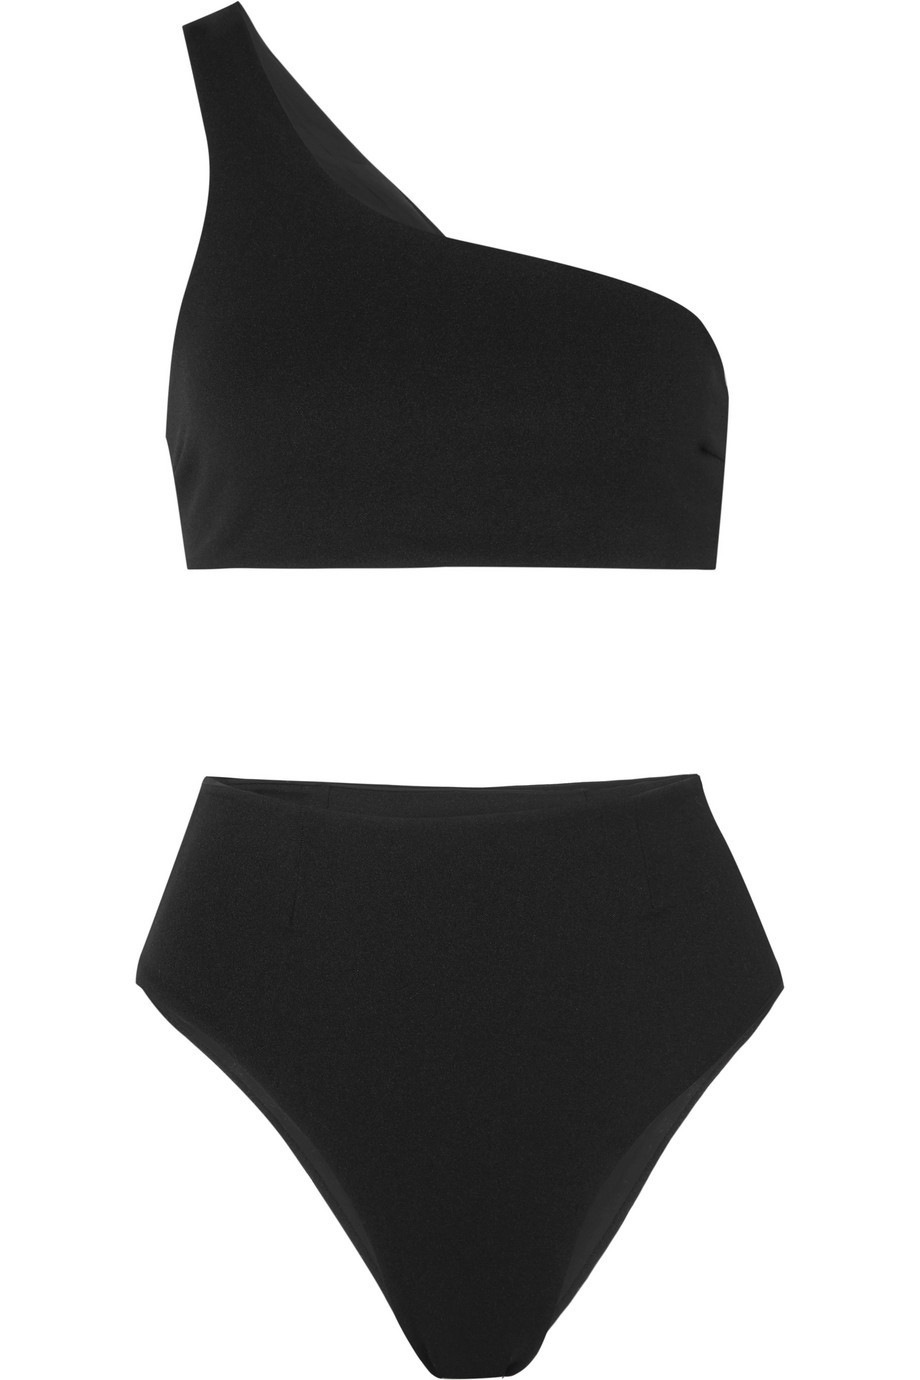 Bikini Haight Modepilot schwarz hoher Beinausschnitt